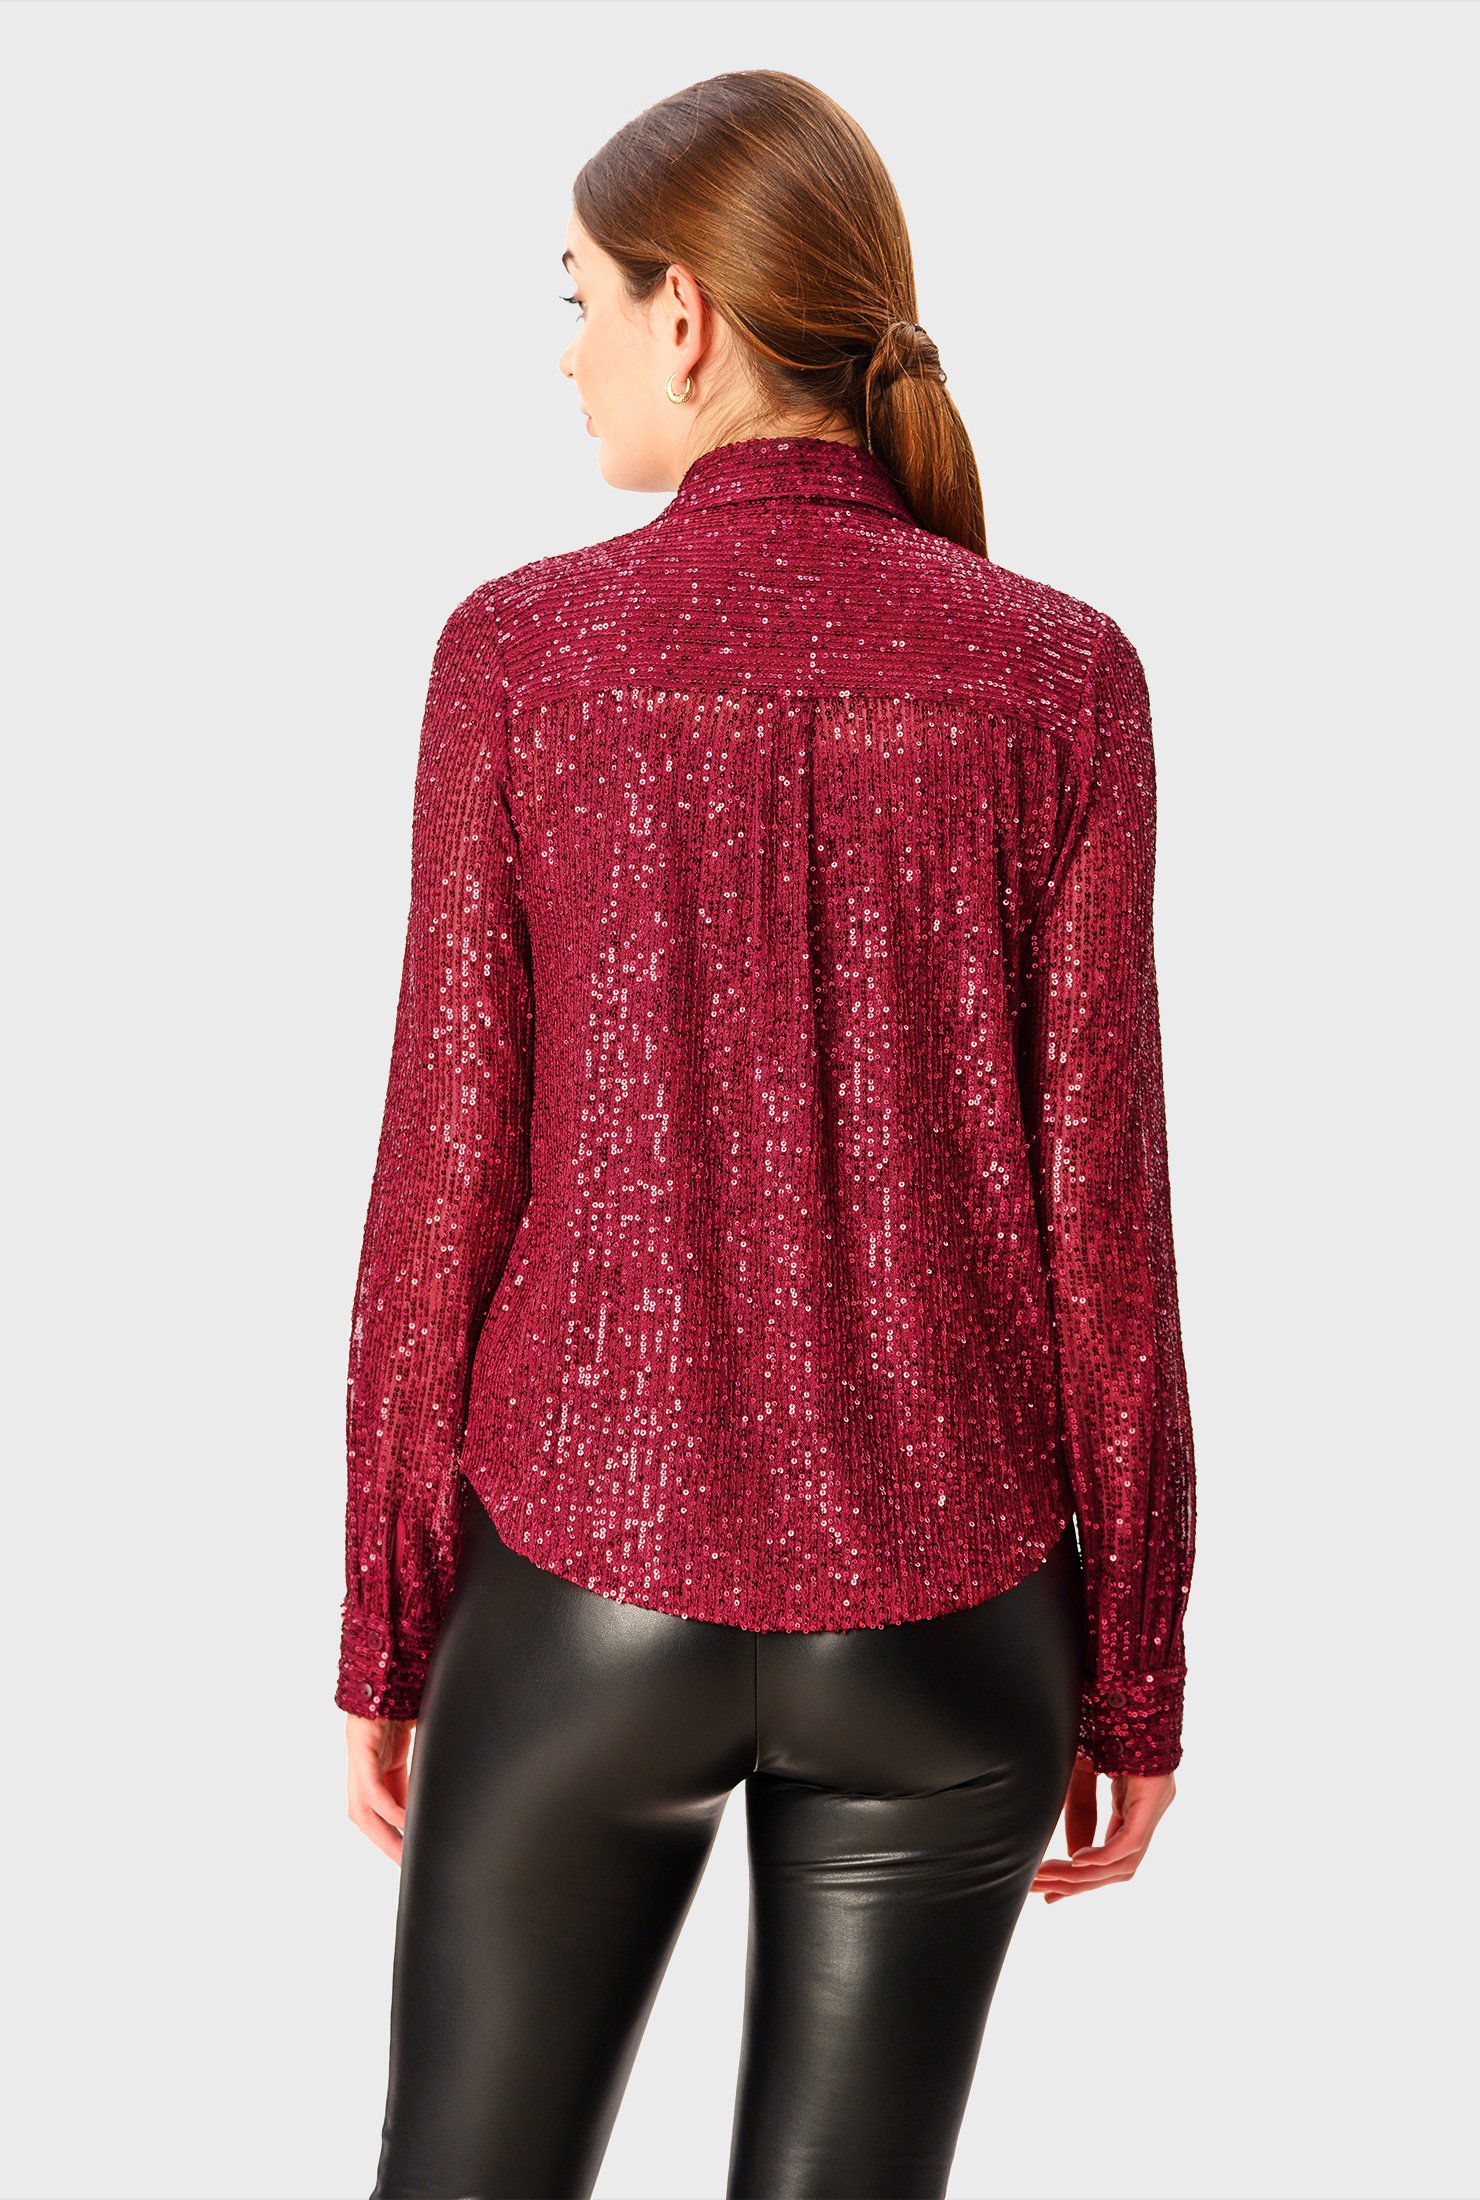 Shop Sequin embellished mesh shirt | eShakti